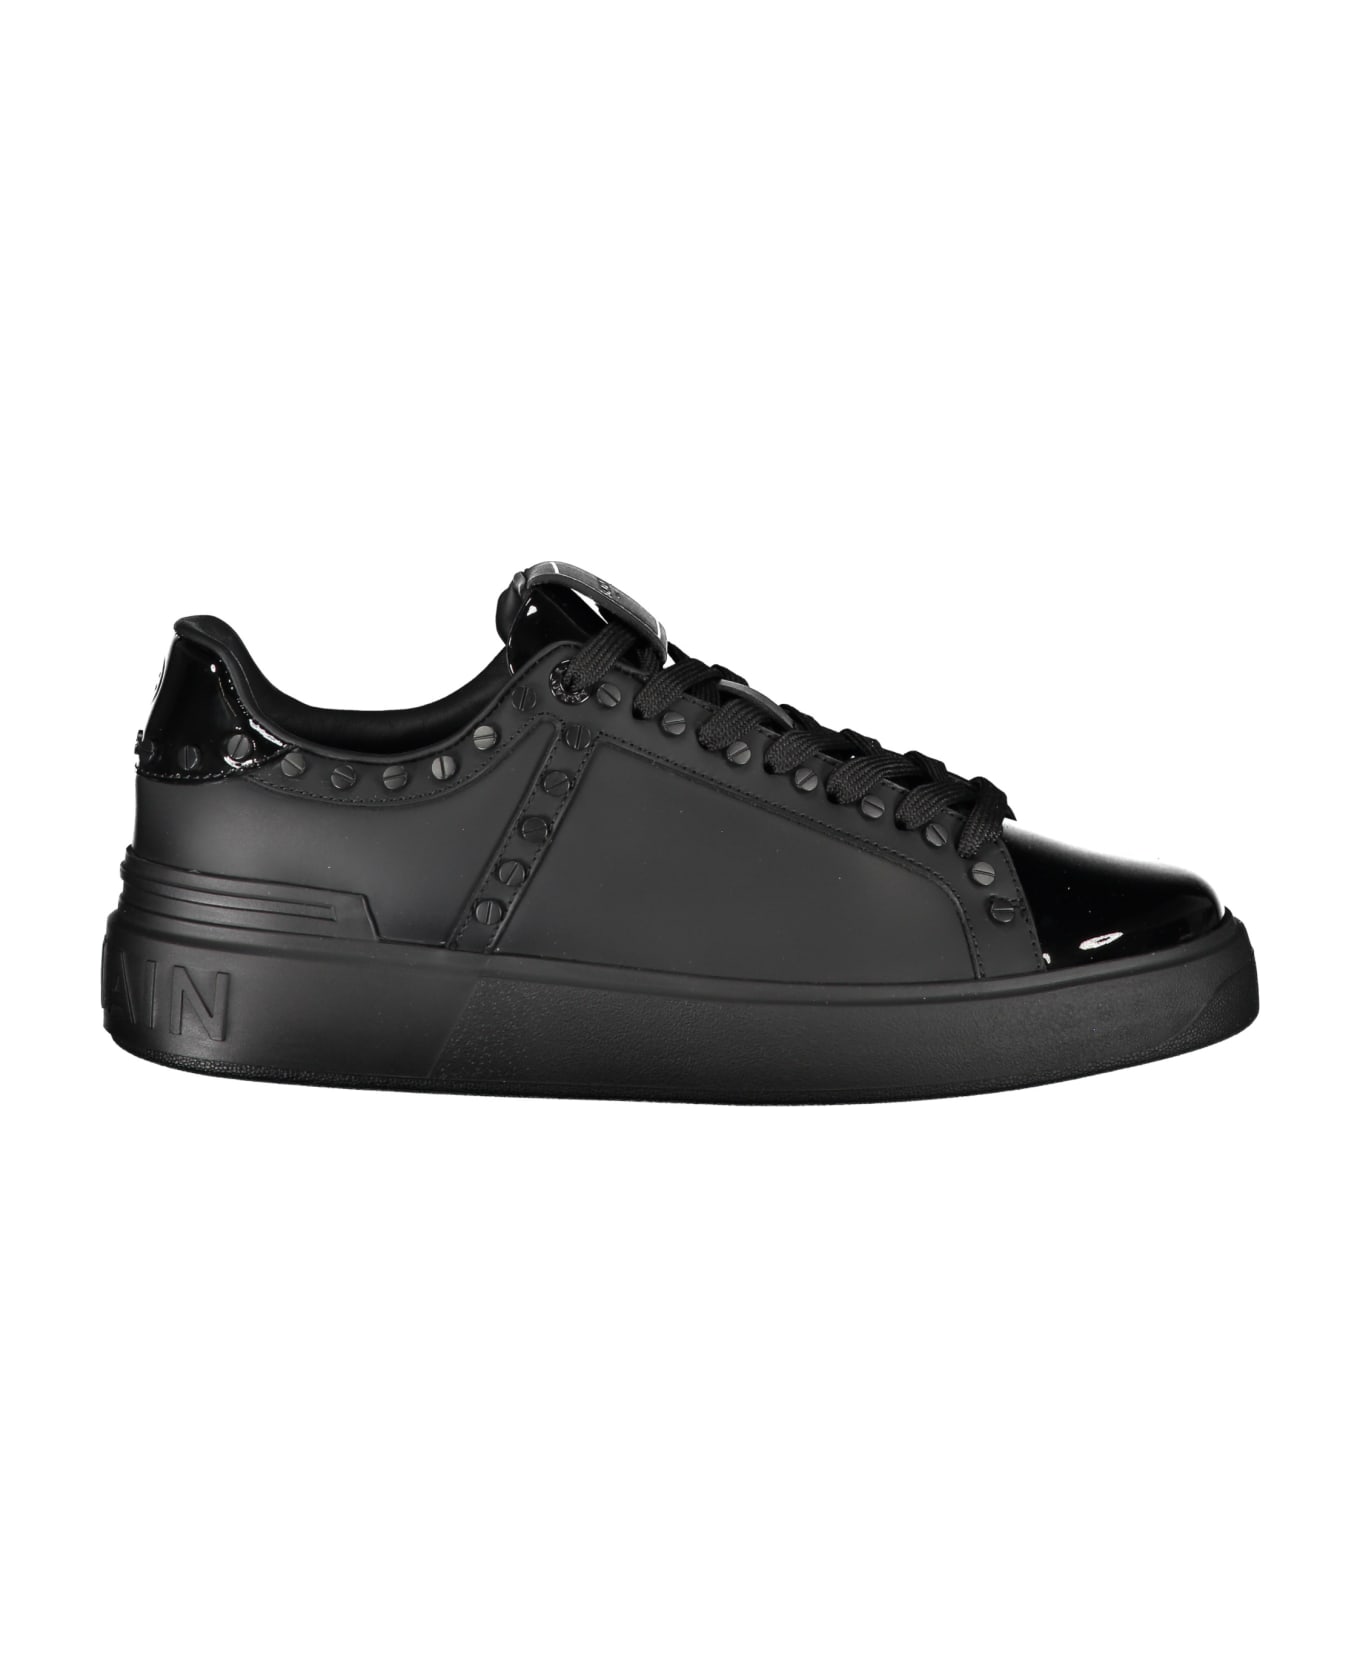 Balmain Leather Sneakers - black スニーカー